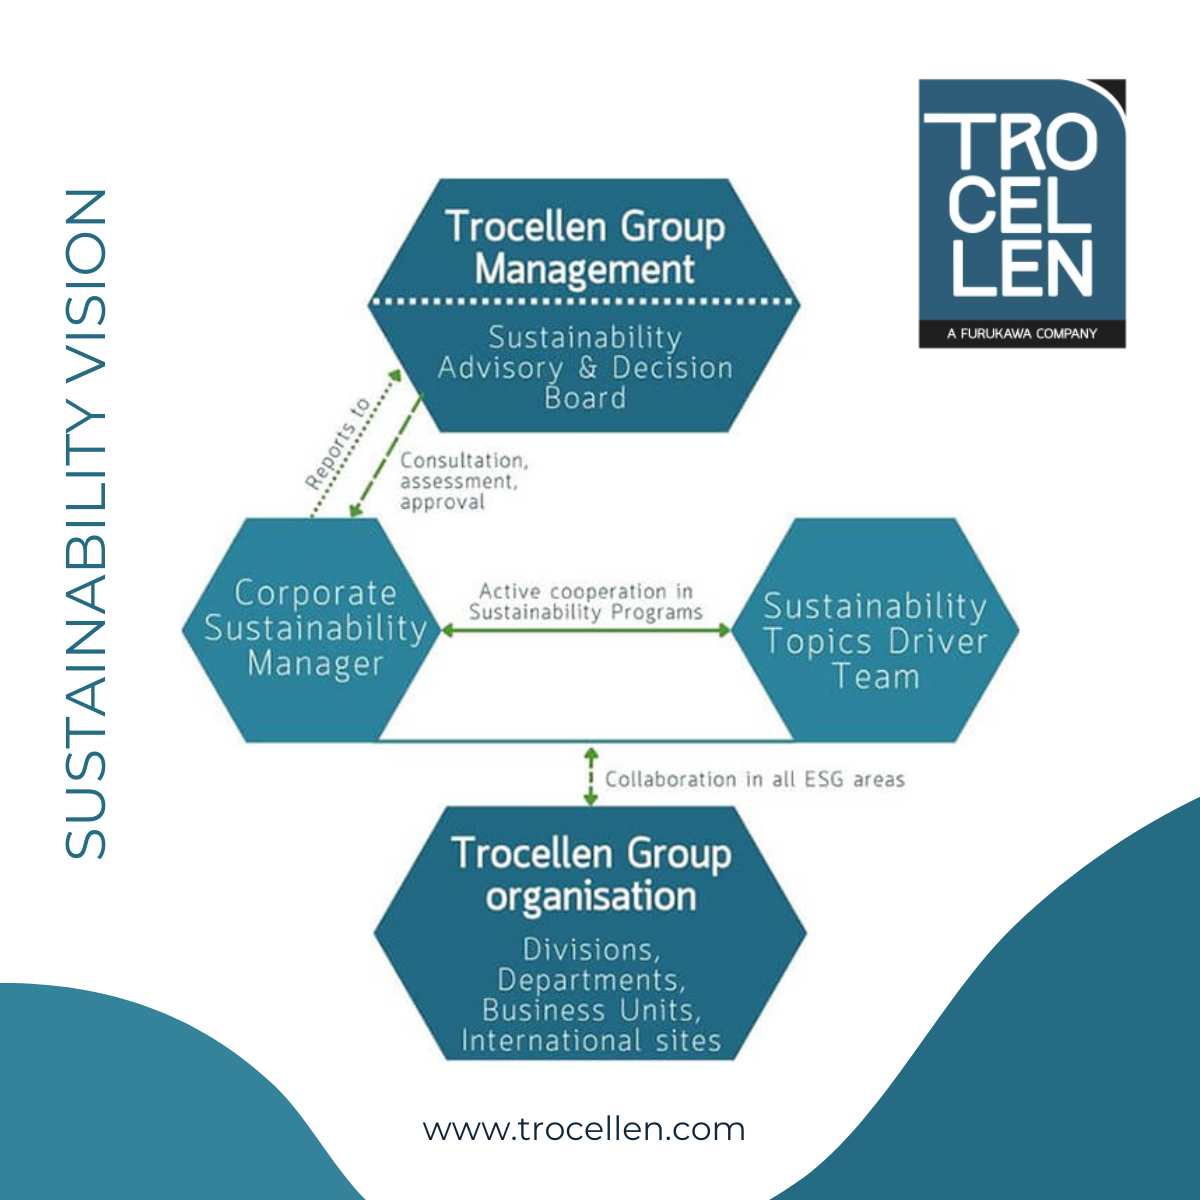 Trocellen Group sustainability vision